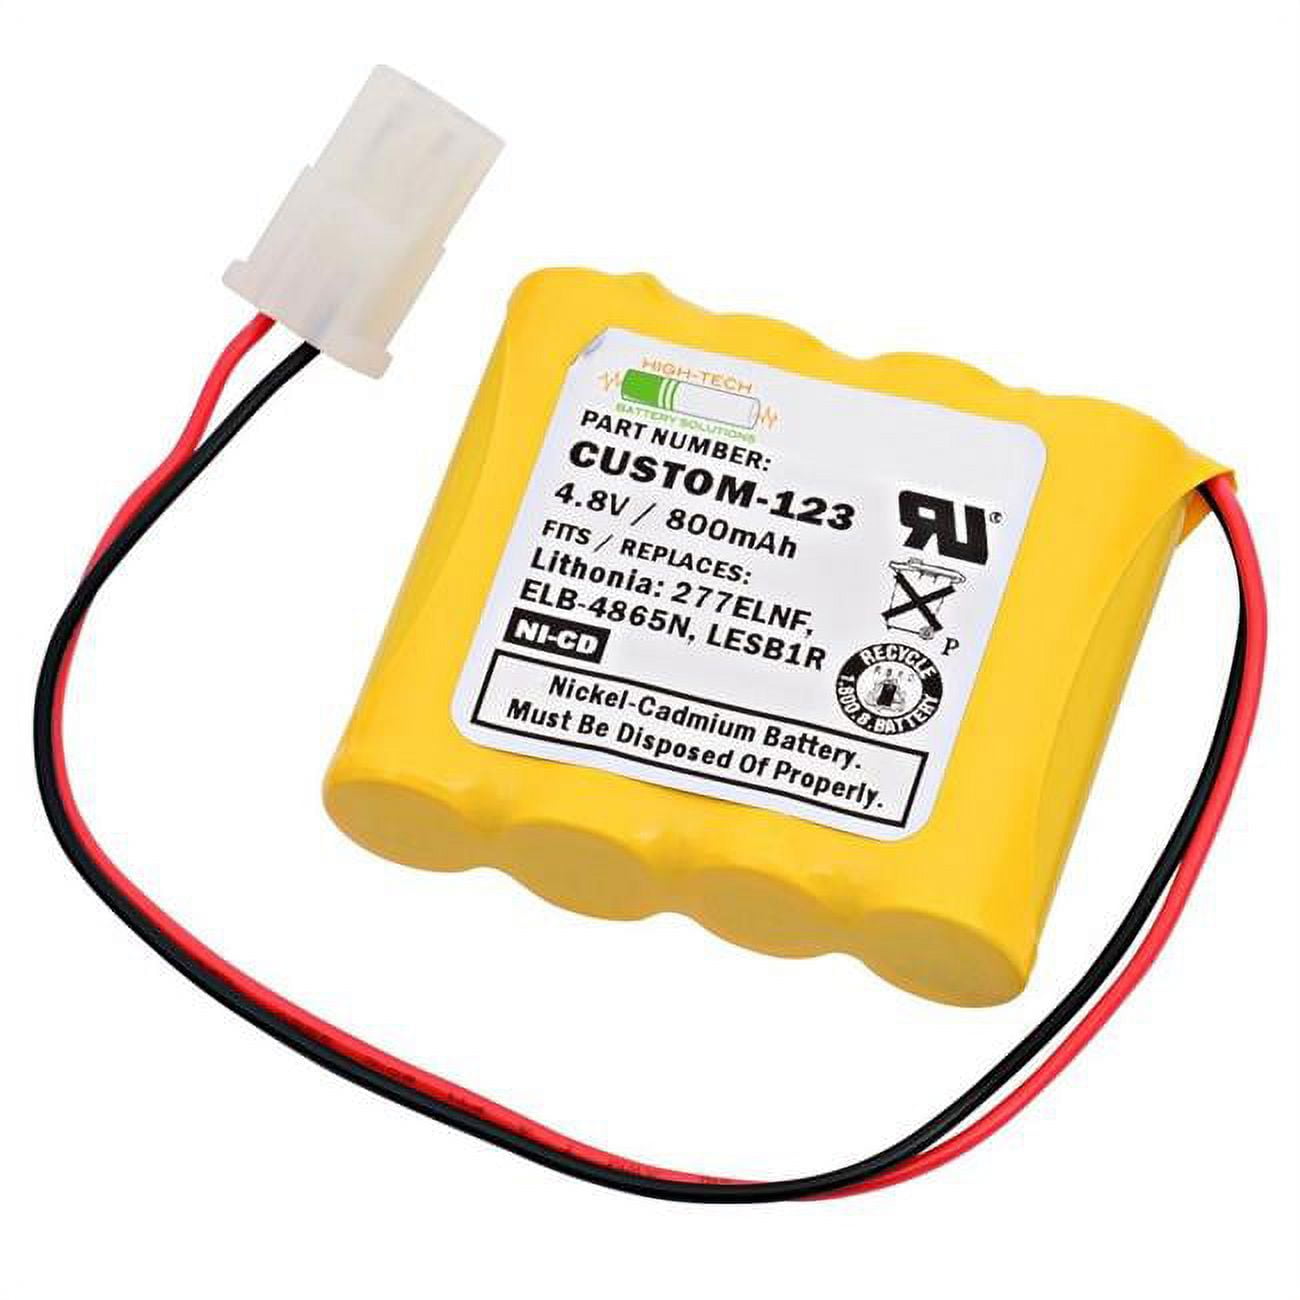 Picture of Dantona CUSTOM-123 Emergency Lighting Battery Replacement